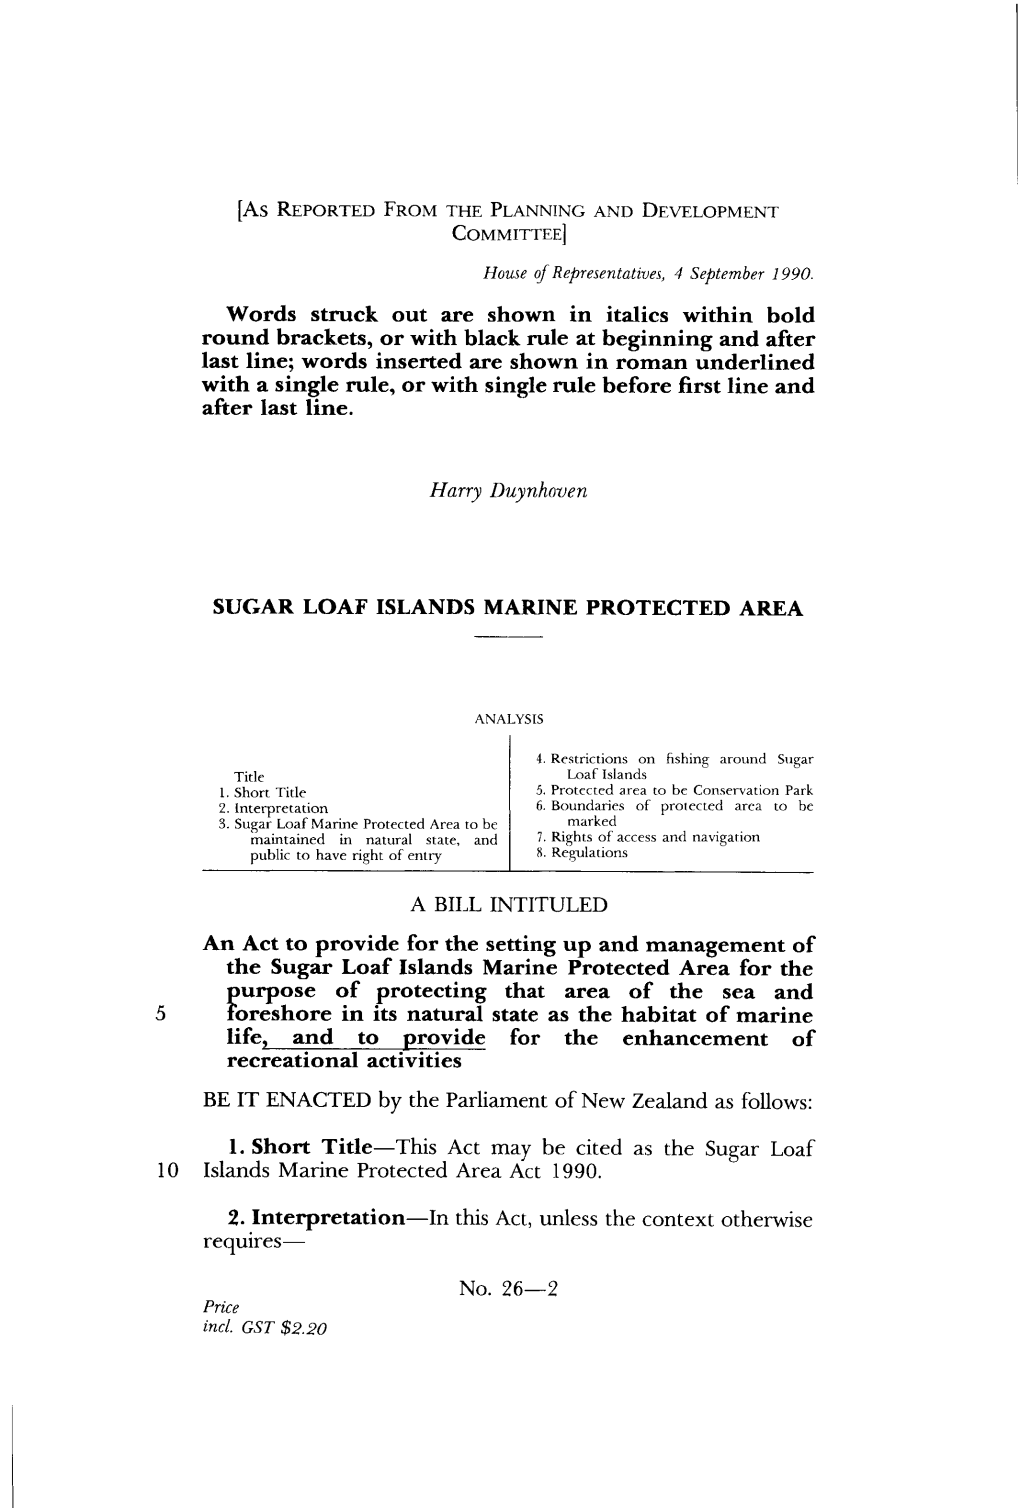 Sugar Loaf Islands Marine Protected Area-26-2